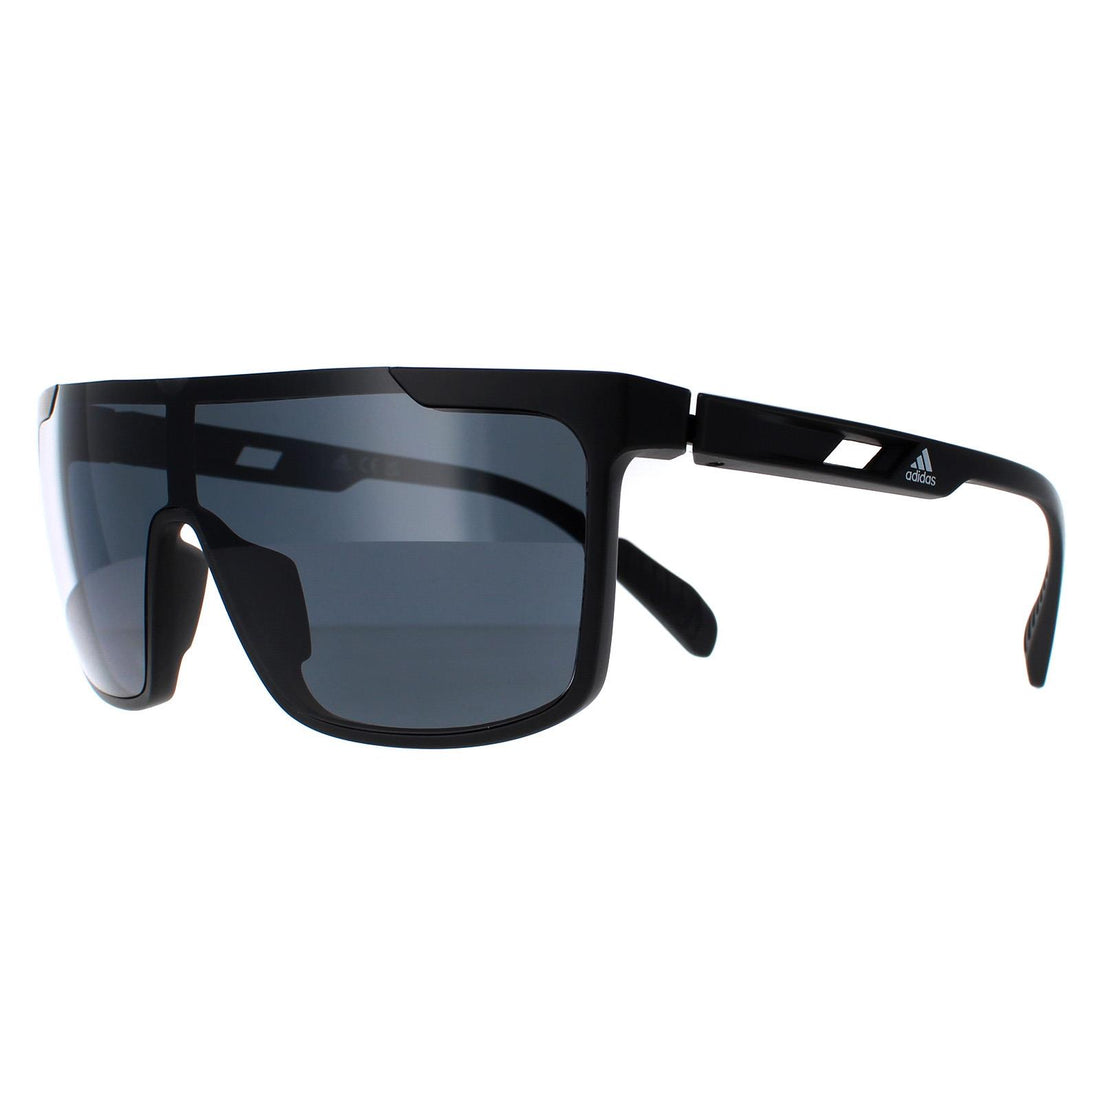 Adidas SP0020 Sunglasses